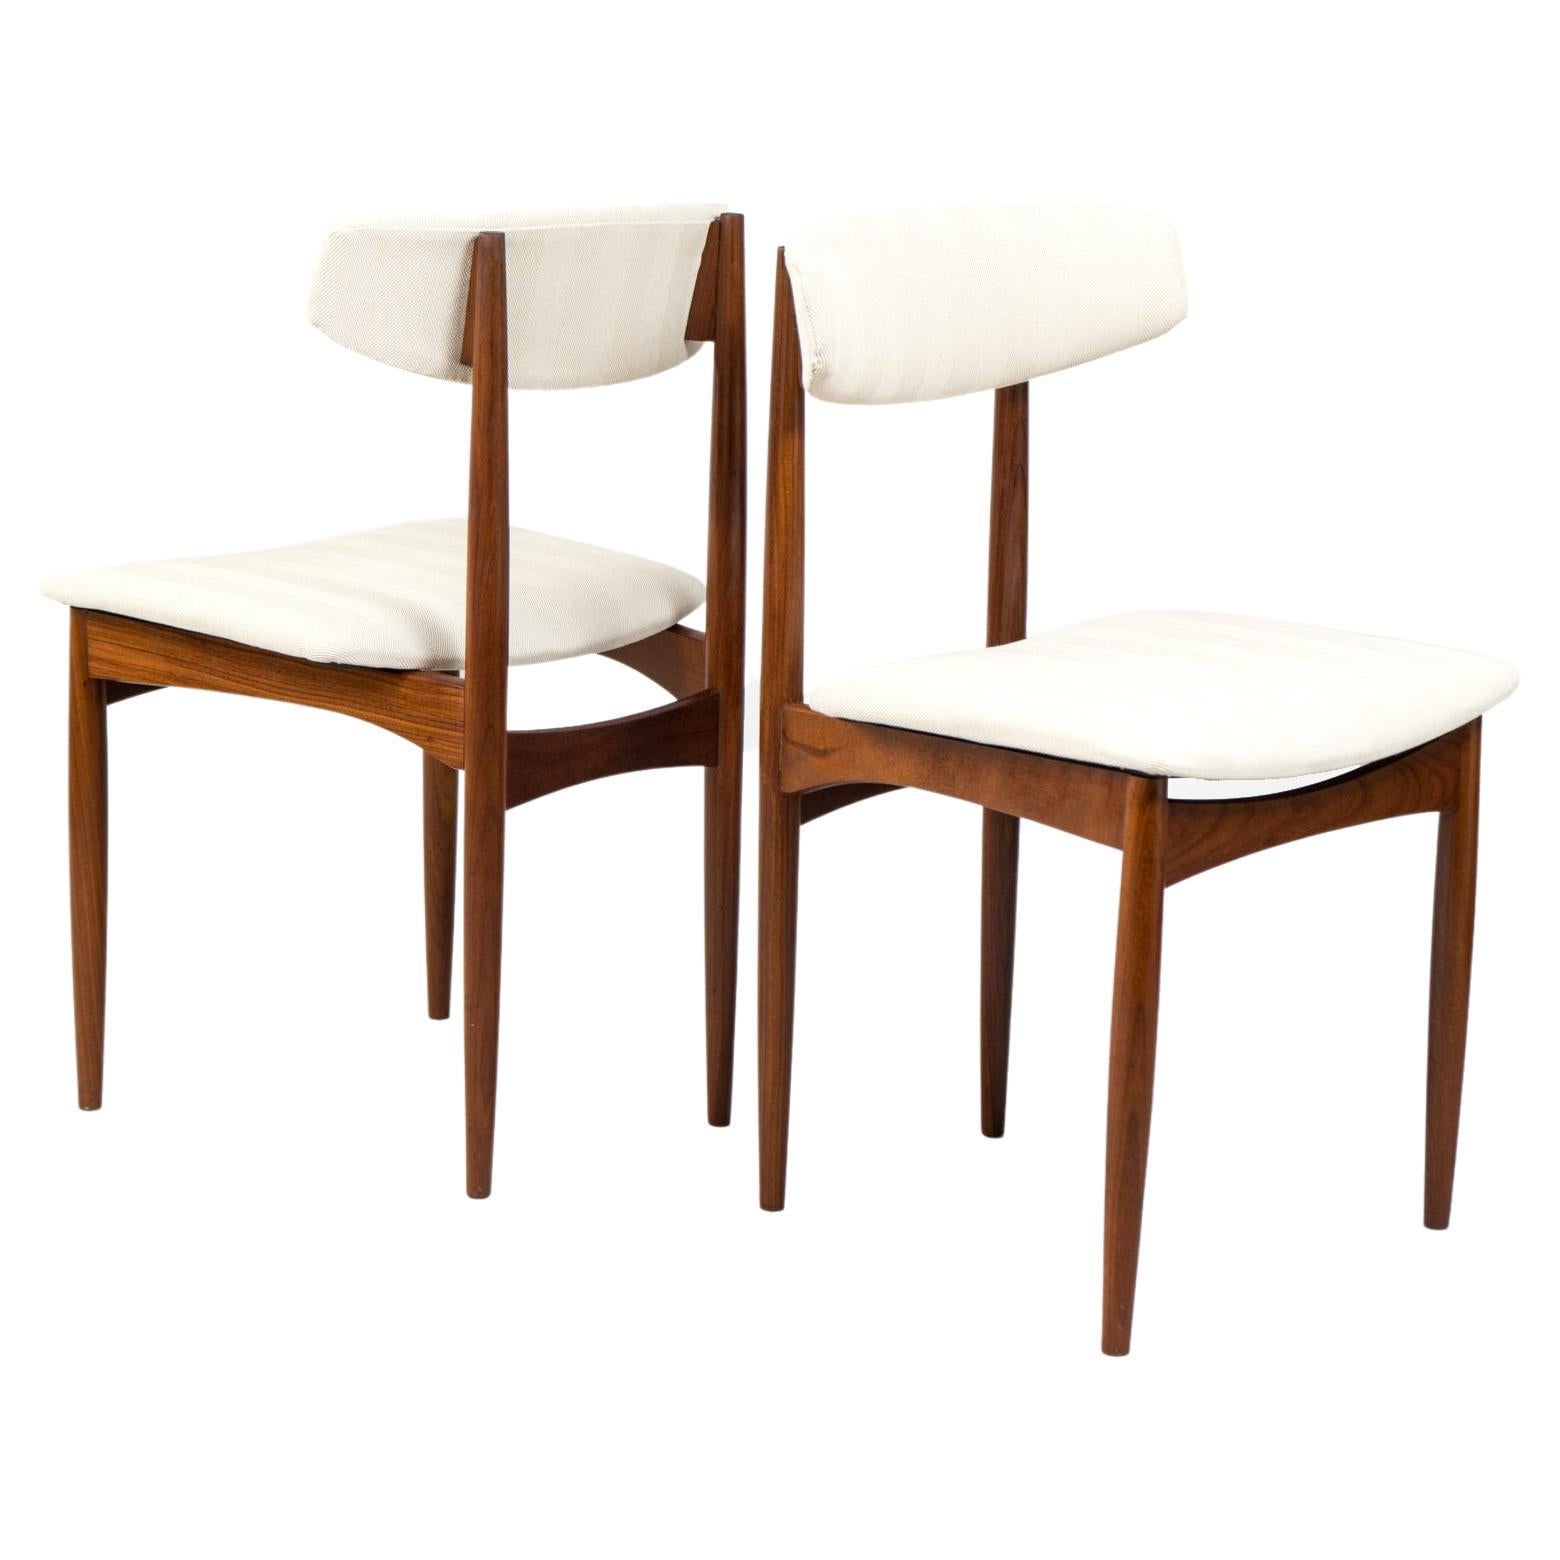 Set of 2 Danish Chairs Made of Teak, 1960, Denmark